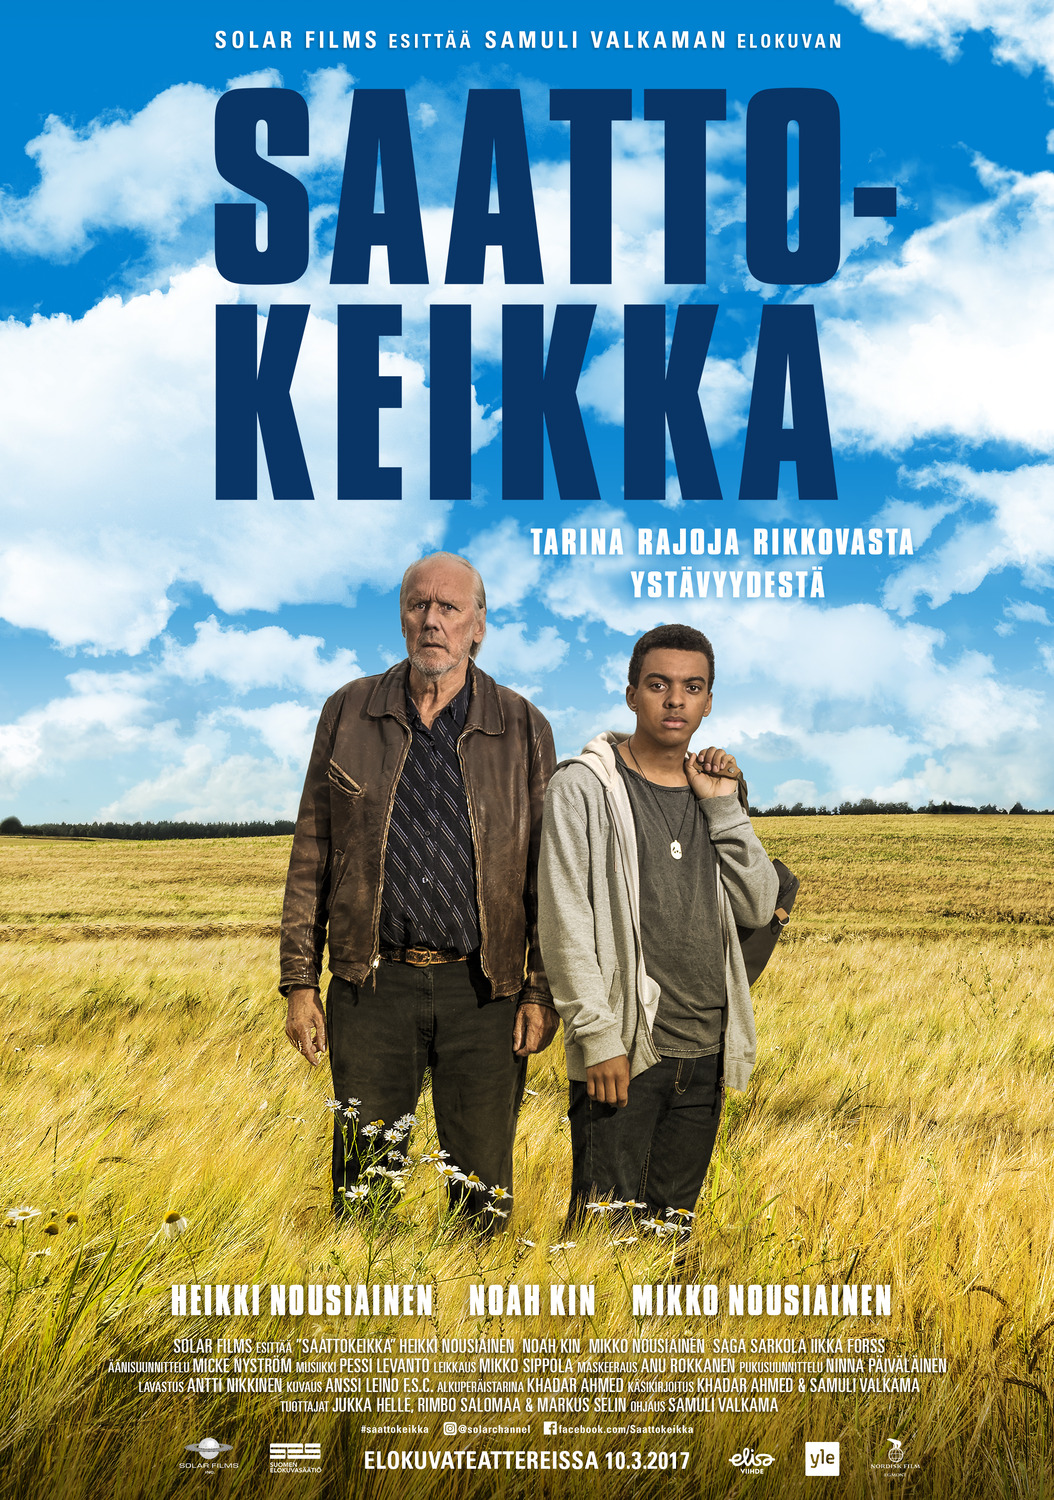 Extra Large Movie Poster Image for Saattokeikka 